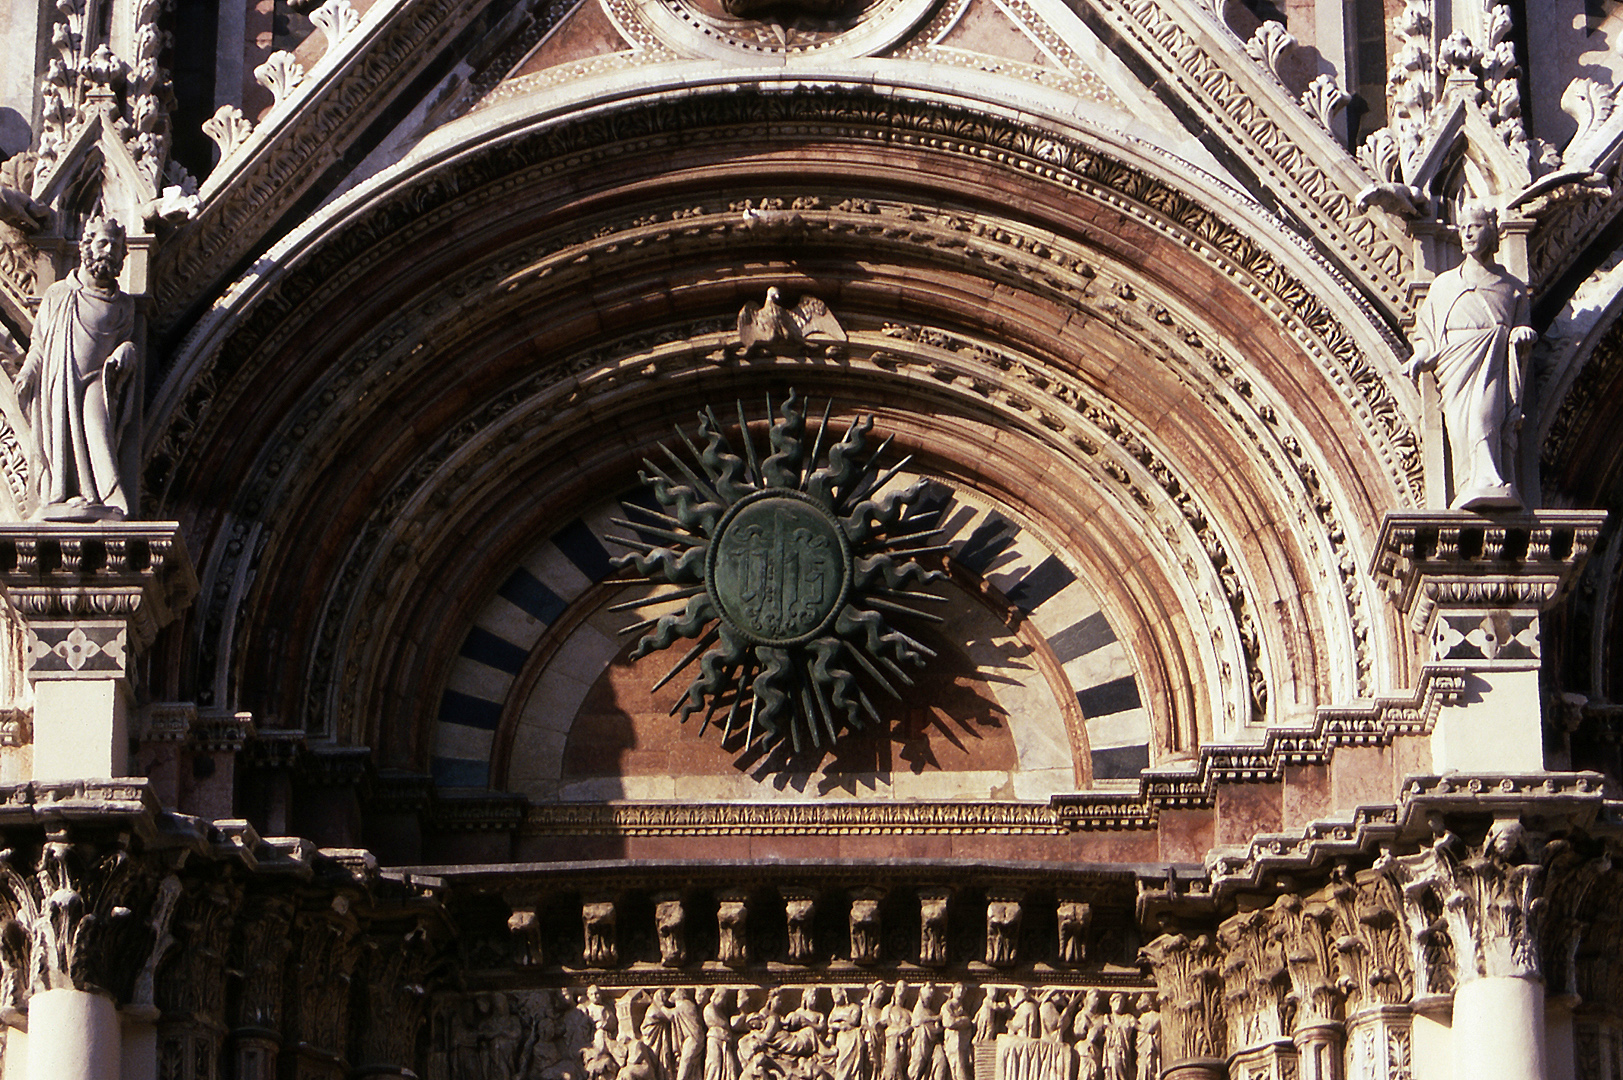 Kathedraal van Siena (Toscane, Italië), Siena Cathedral (Tuscany, Italy)